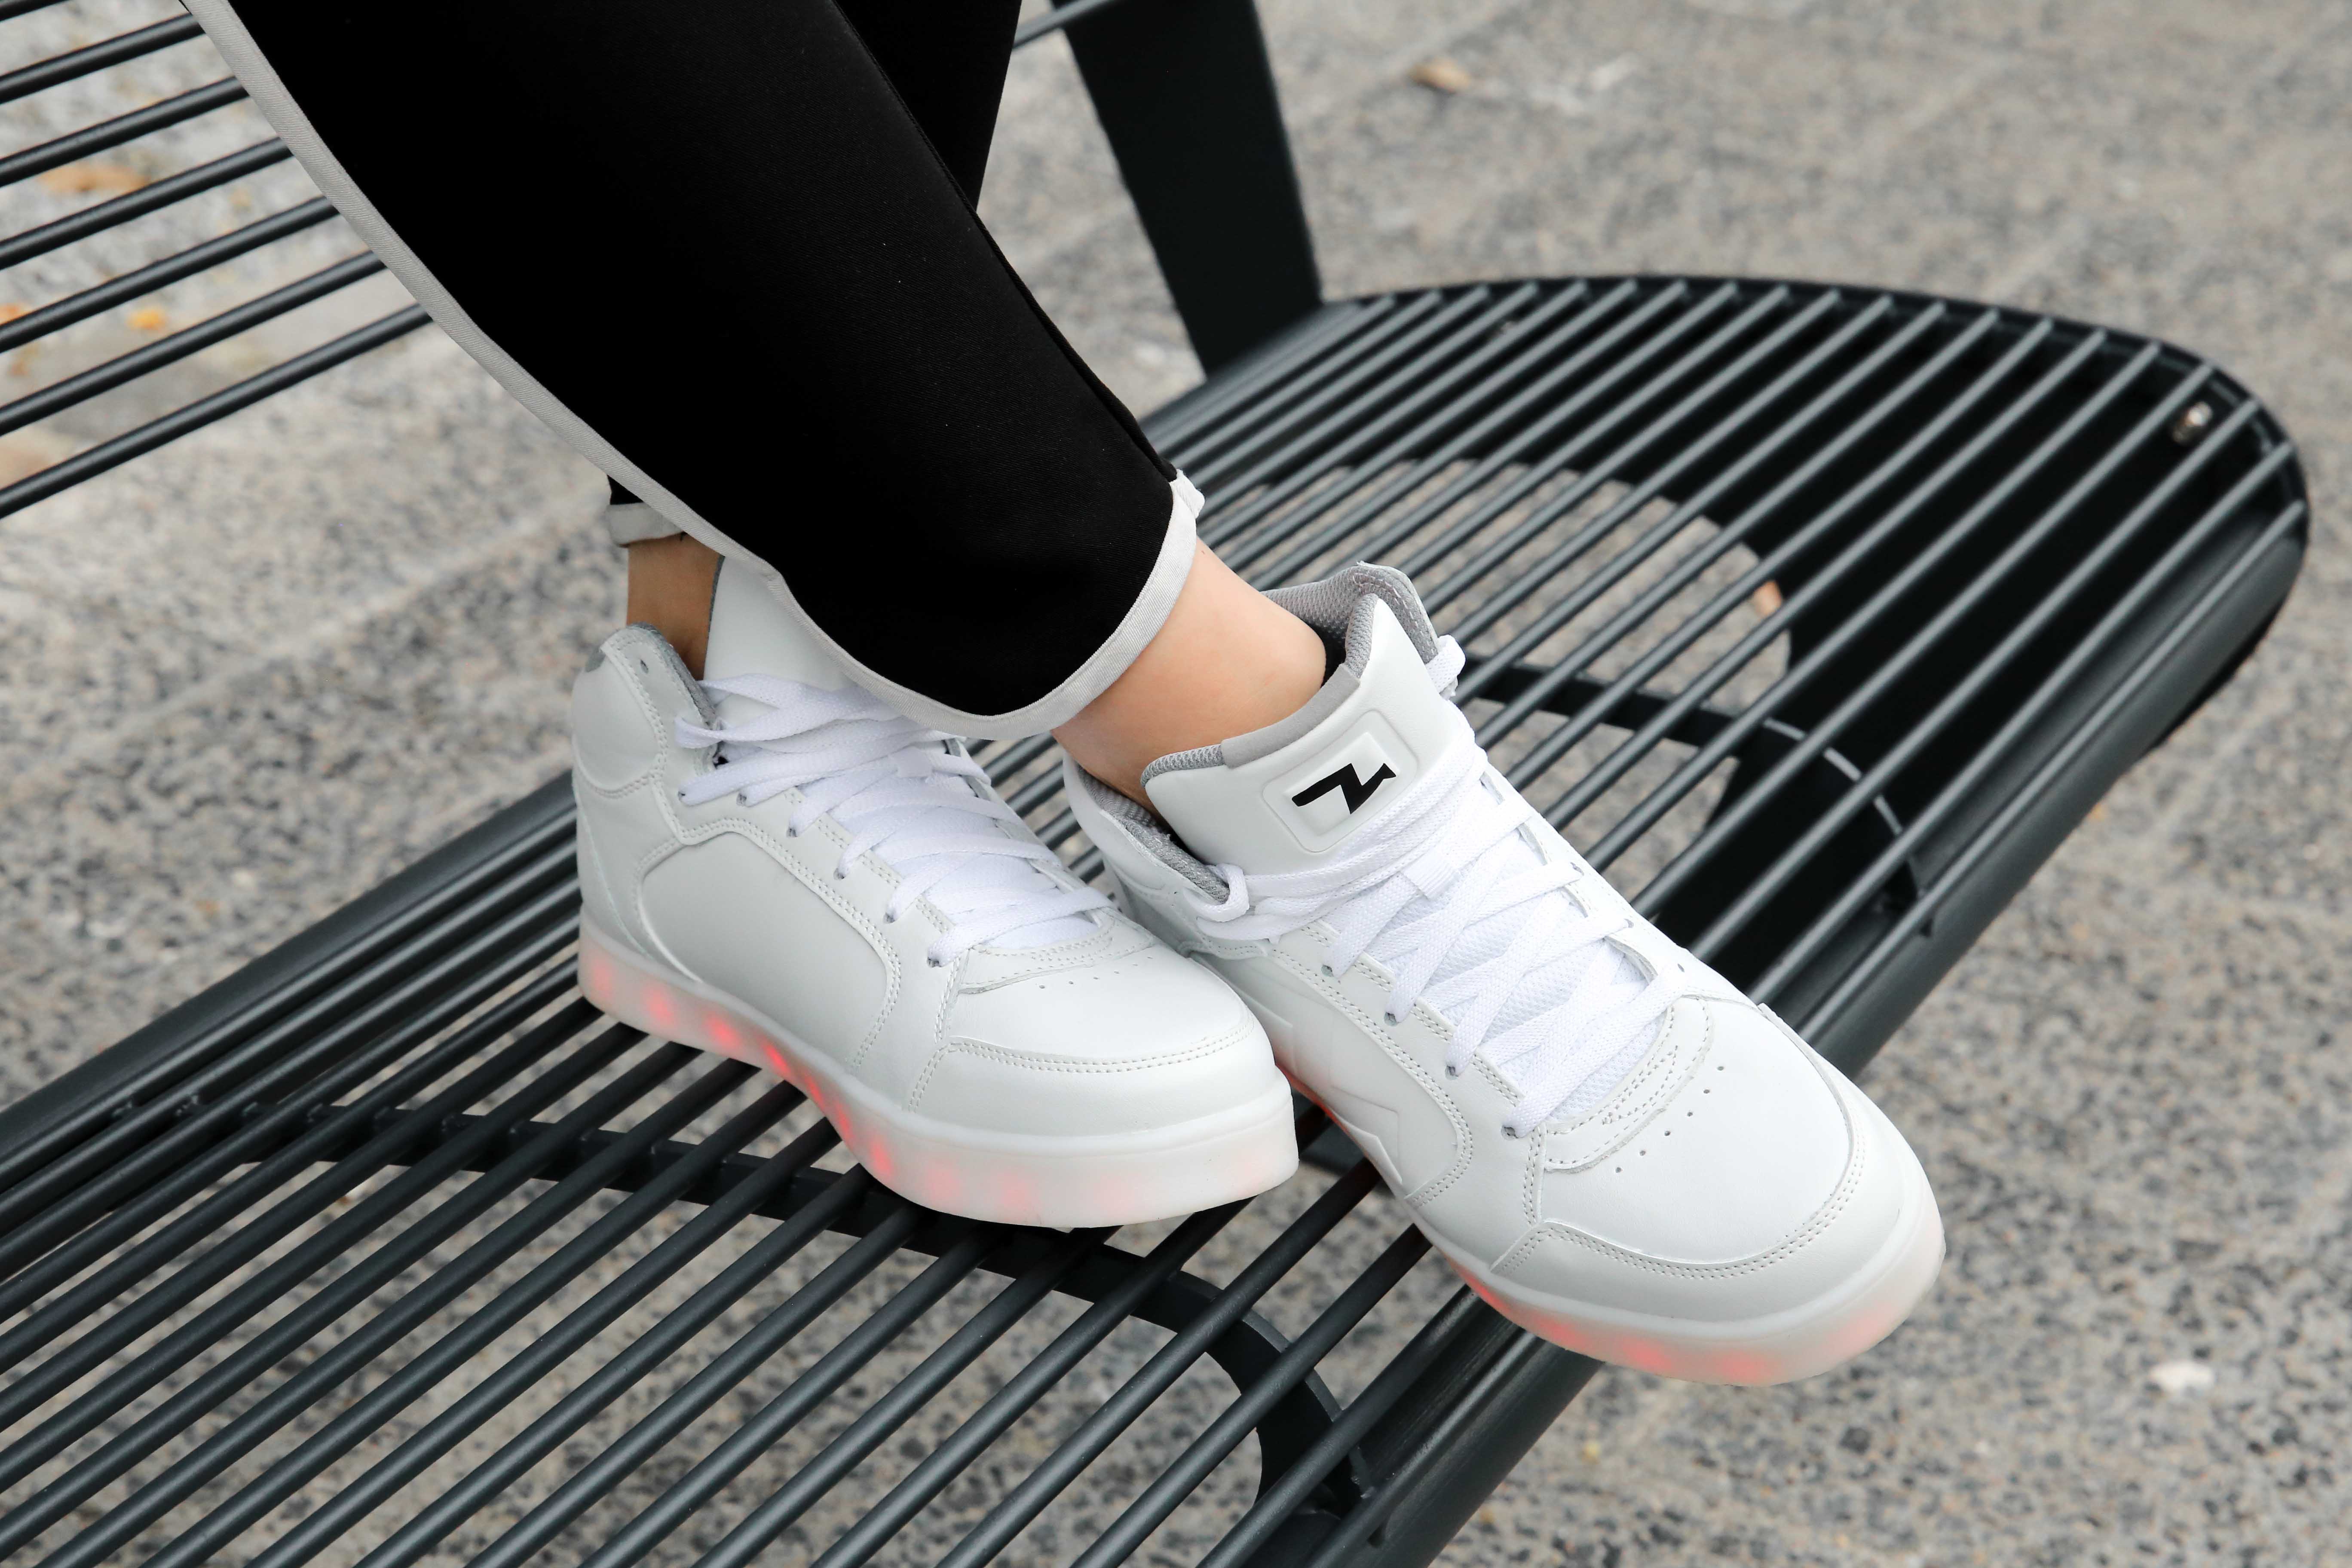 LED-Schuhe-Skechers-Outfit-Modeblog-College-Jacke-Sportlich-Fashion-Blog-Blogger_1449